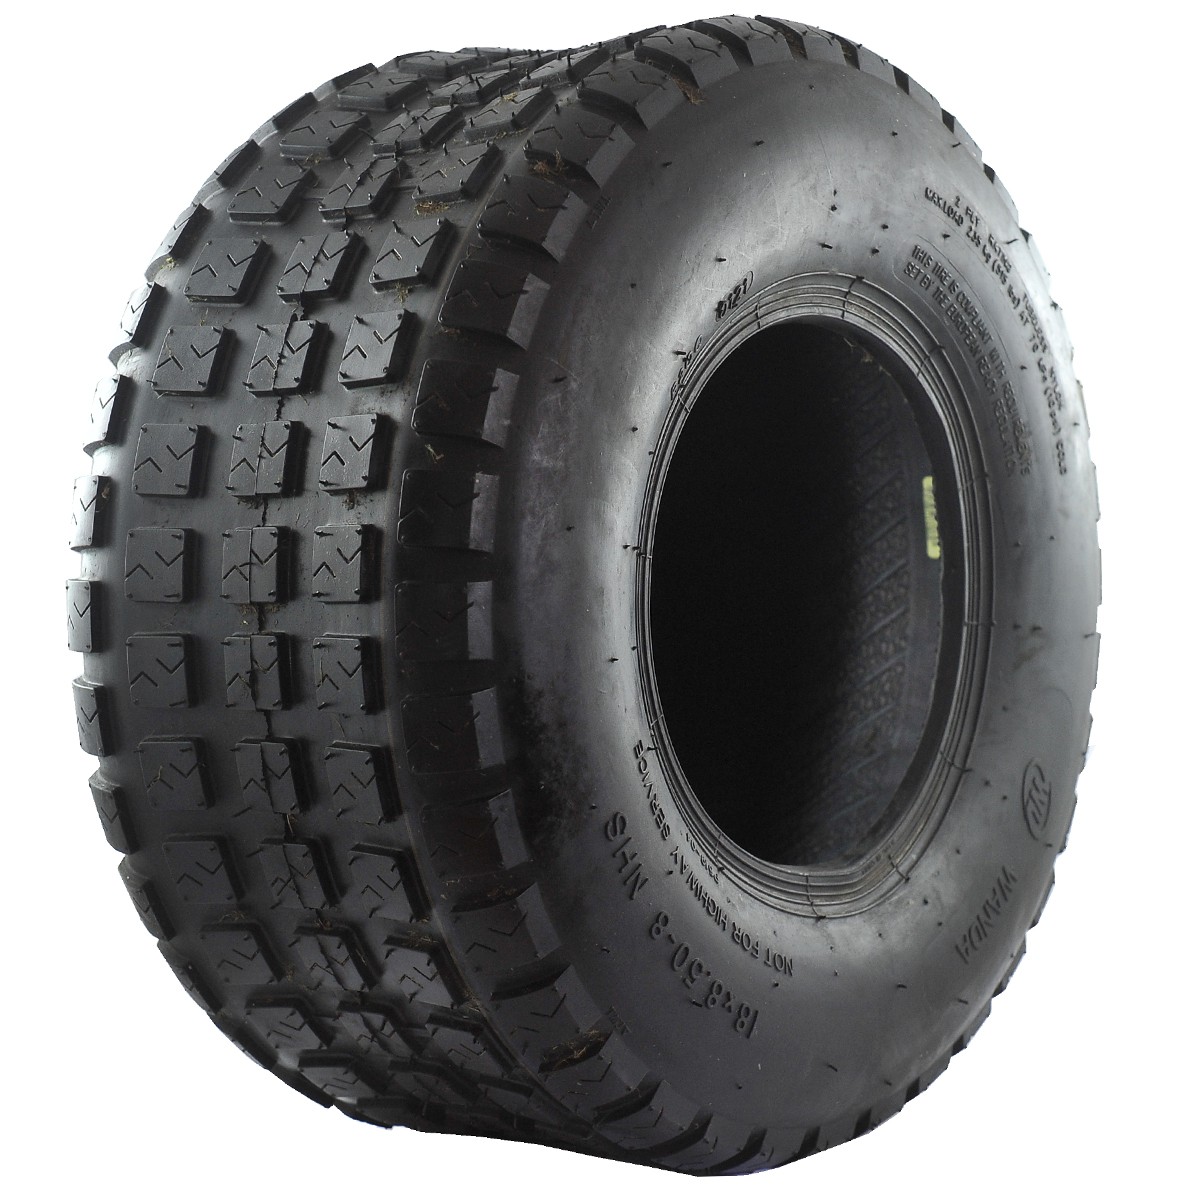 Neumático para tractor cortacésped AL-KO T15-93.7 HD-A / 18 x 8.50-8 NHS / 471020